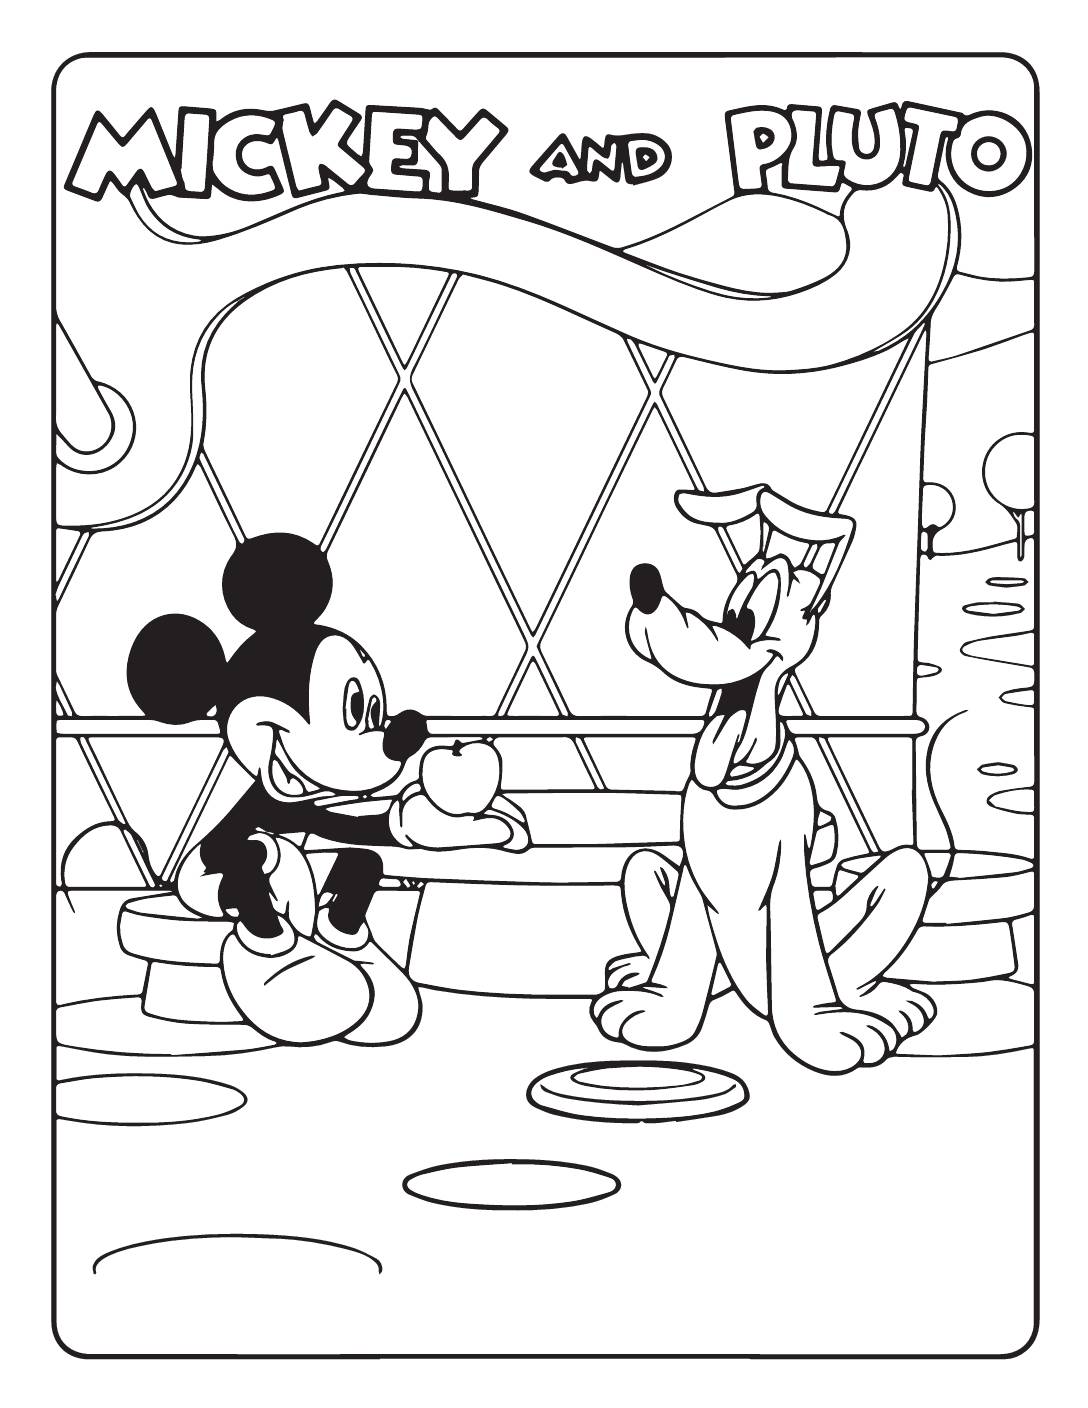 Mickey & Pluto Coloring Page